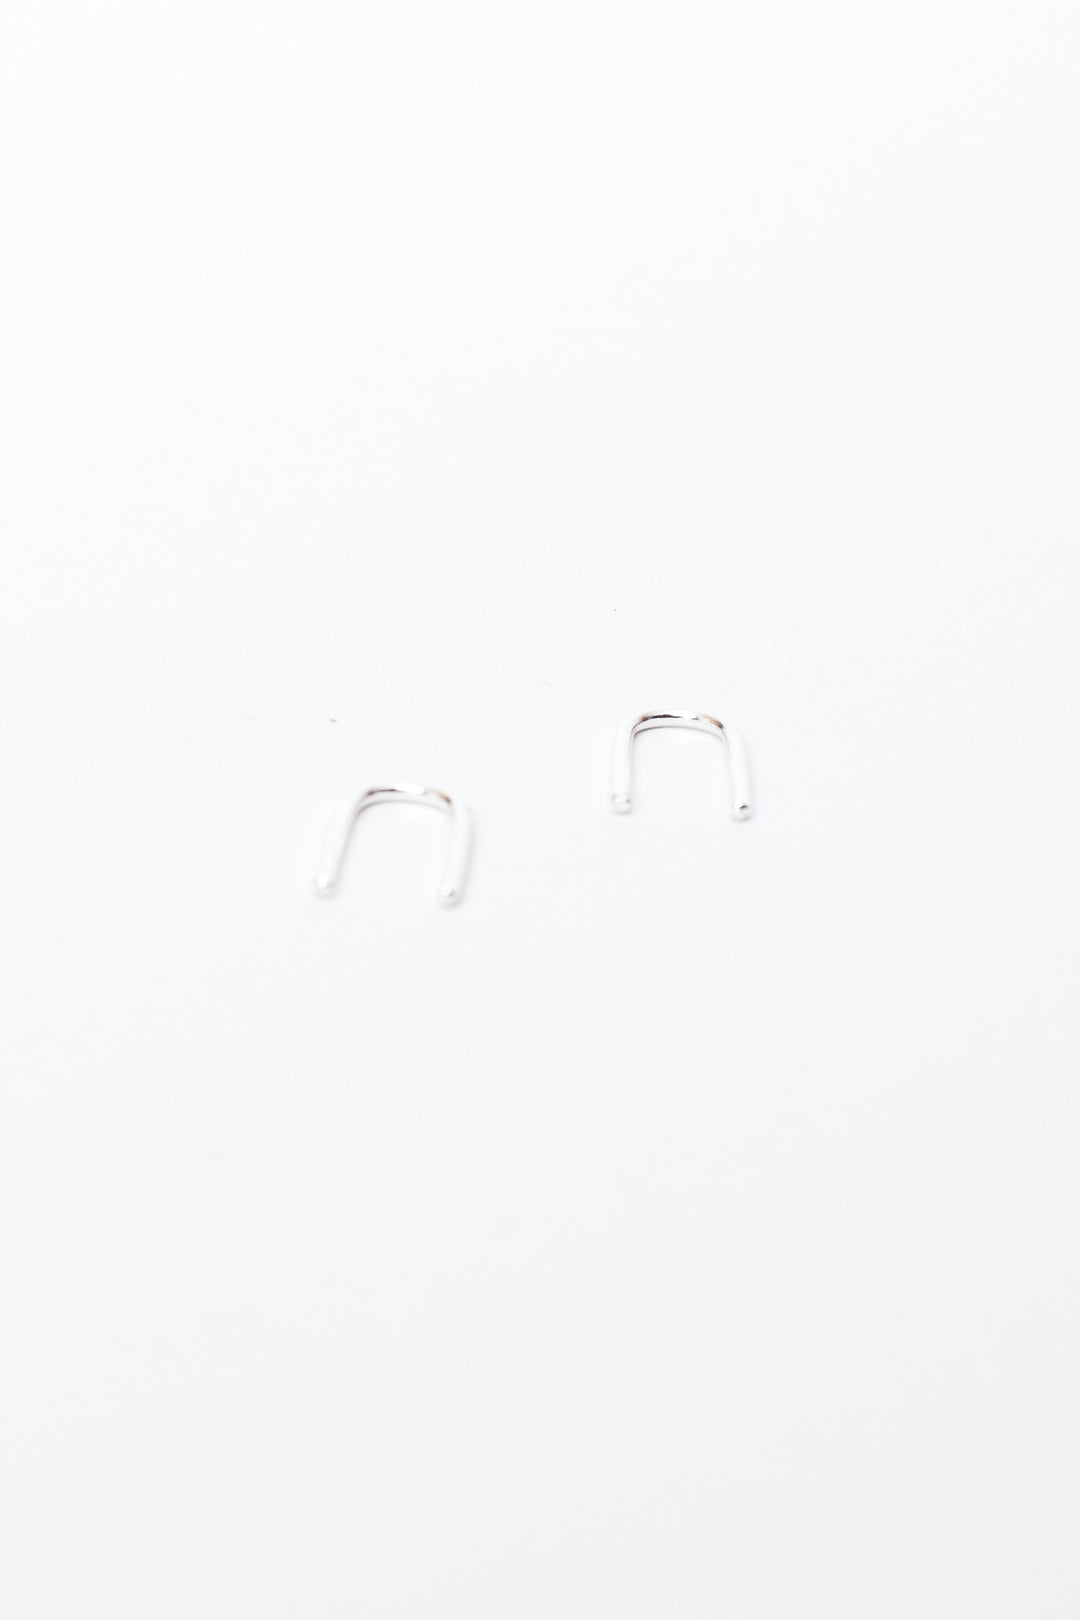 U-Shaped Earrings - Silver, Baleen, - Frances Jaye